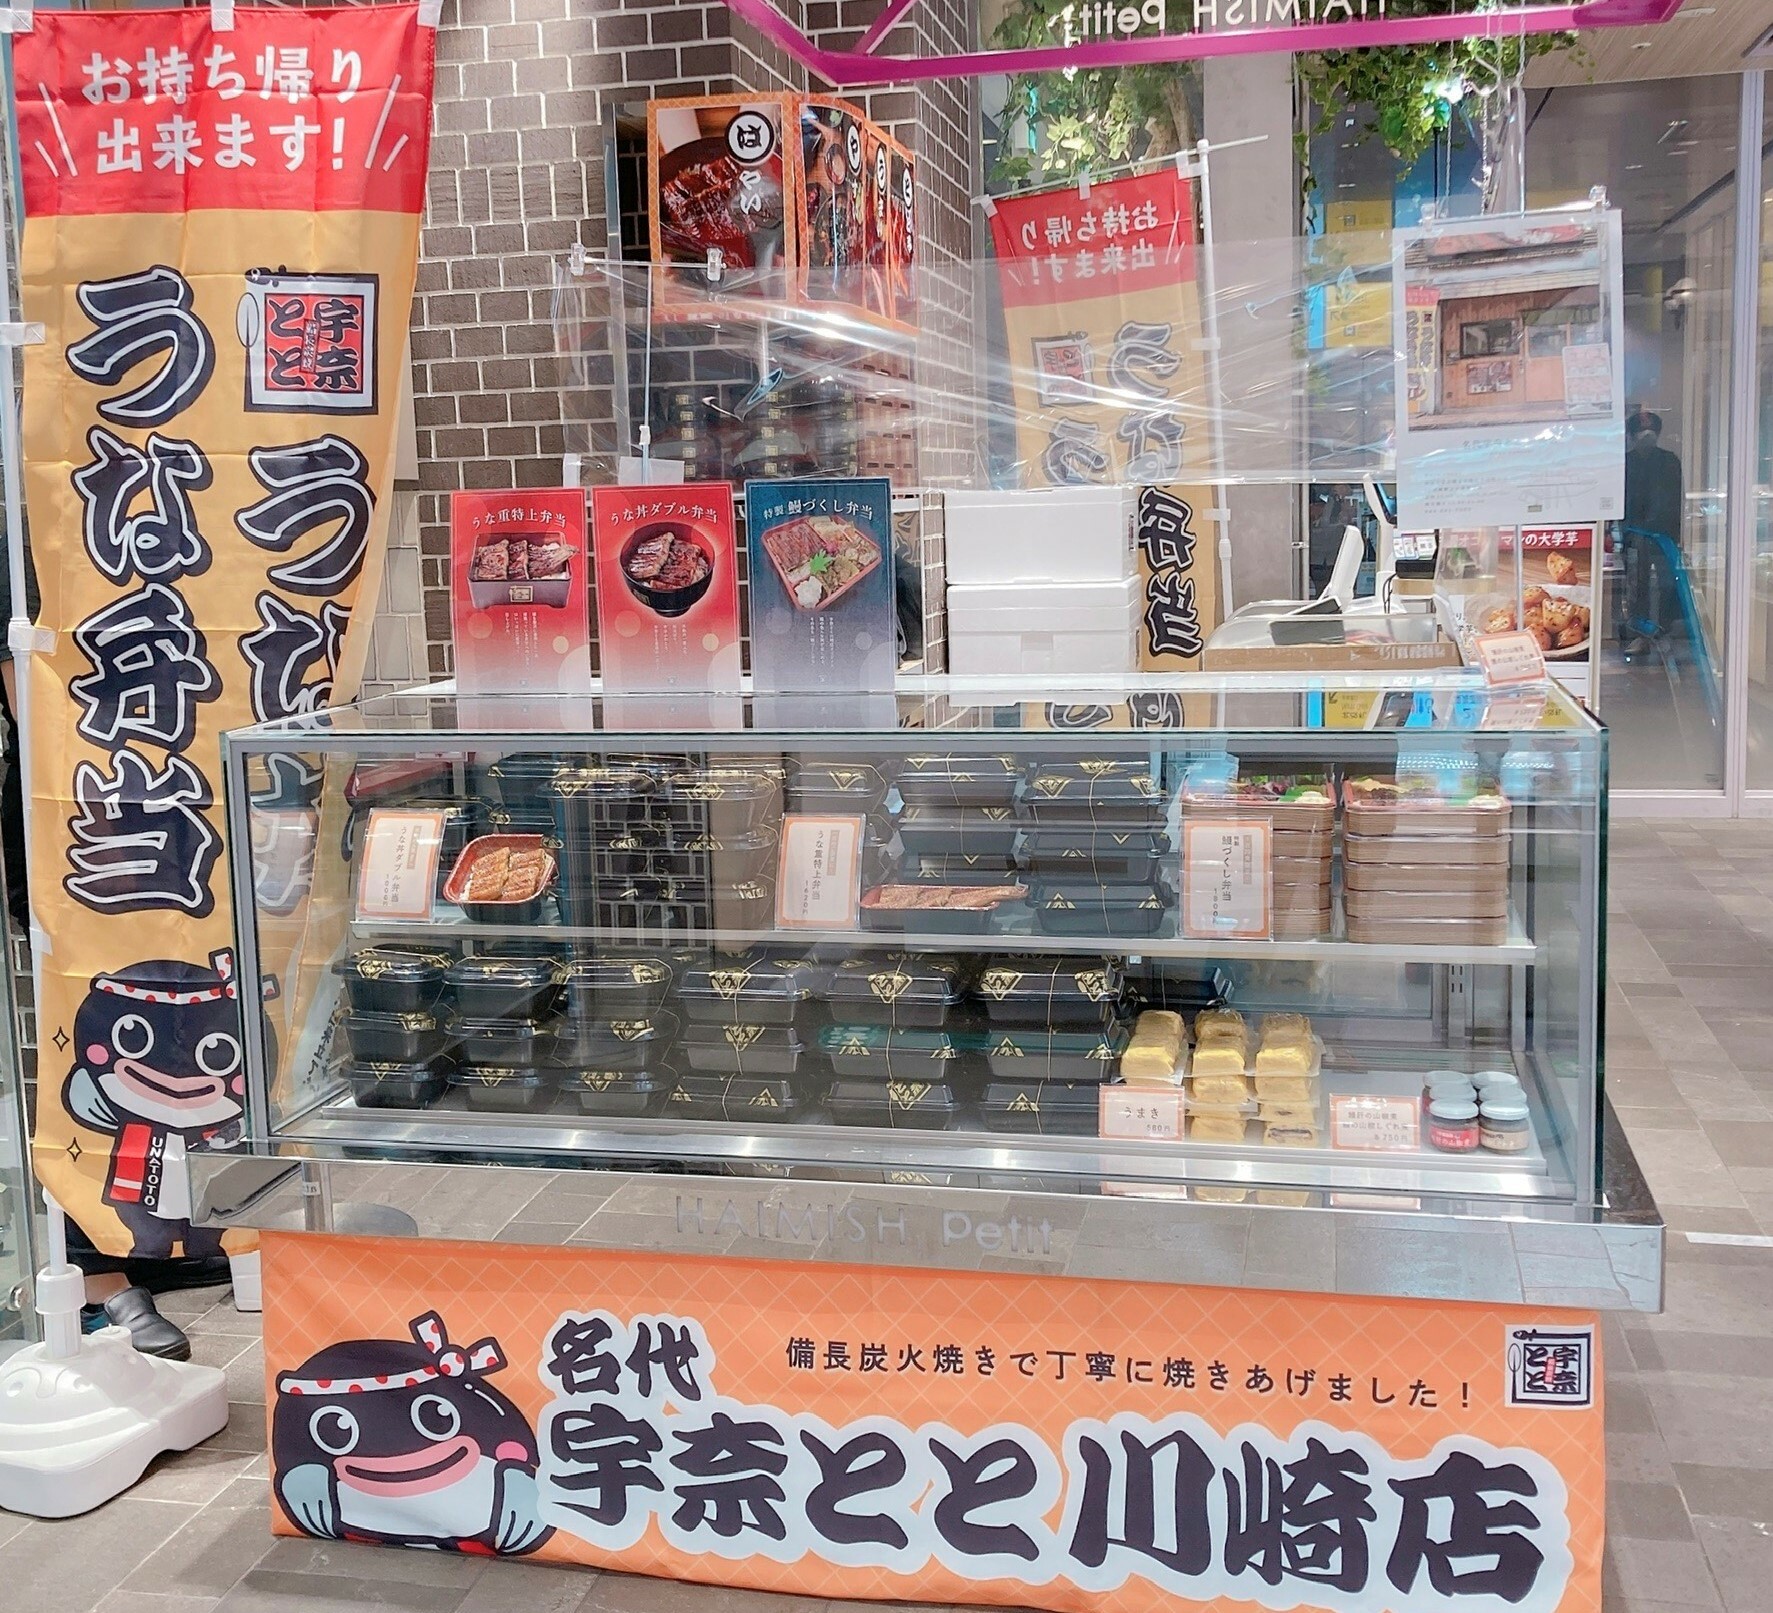 JR川崎駅アトレ北改札売り場での川崎店の出張販売の様子。